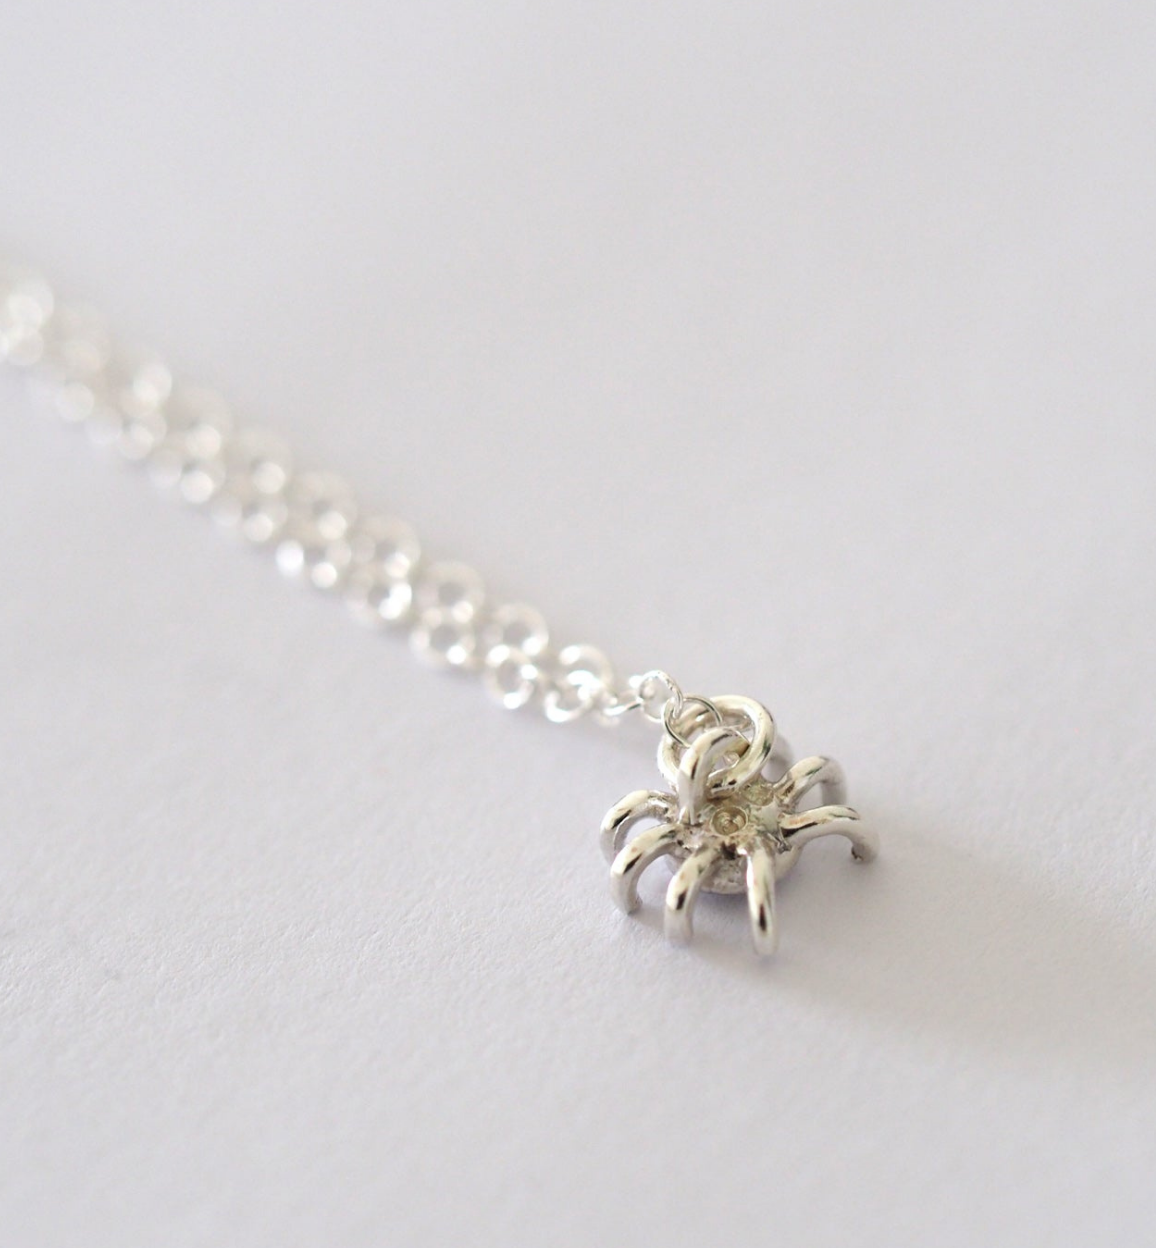 Spider Silver Necklace